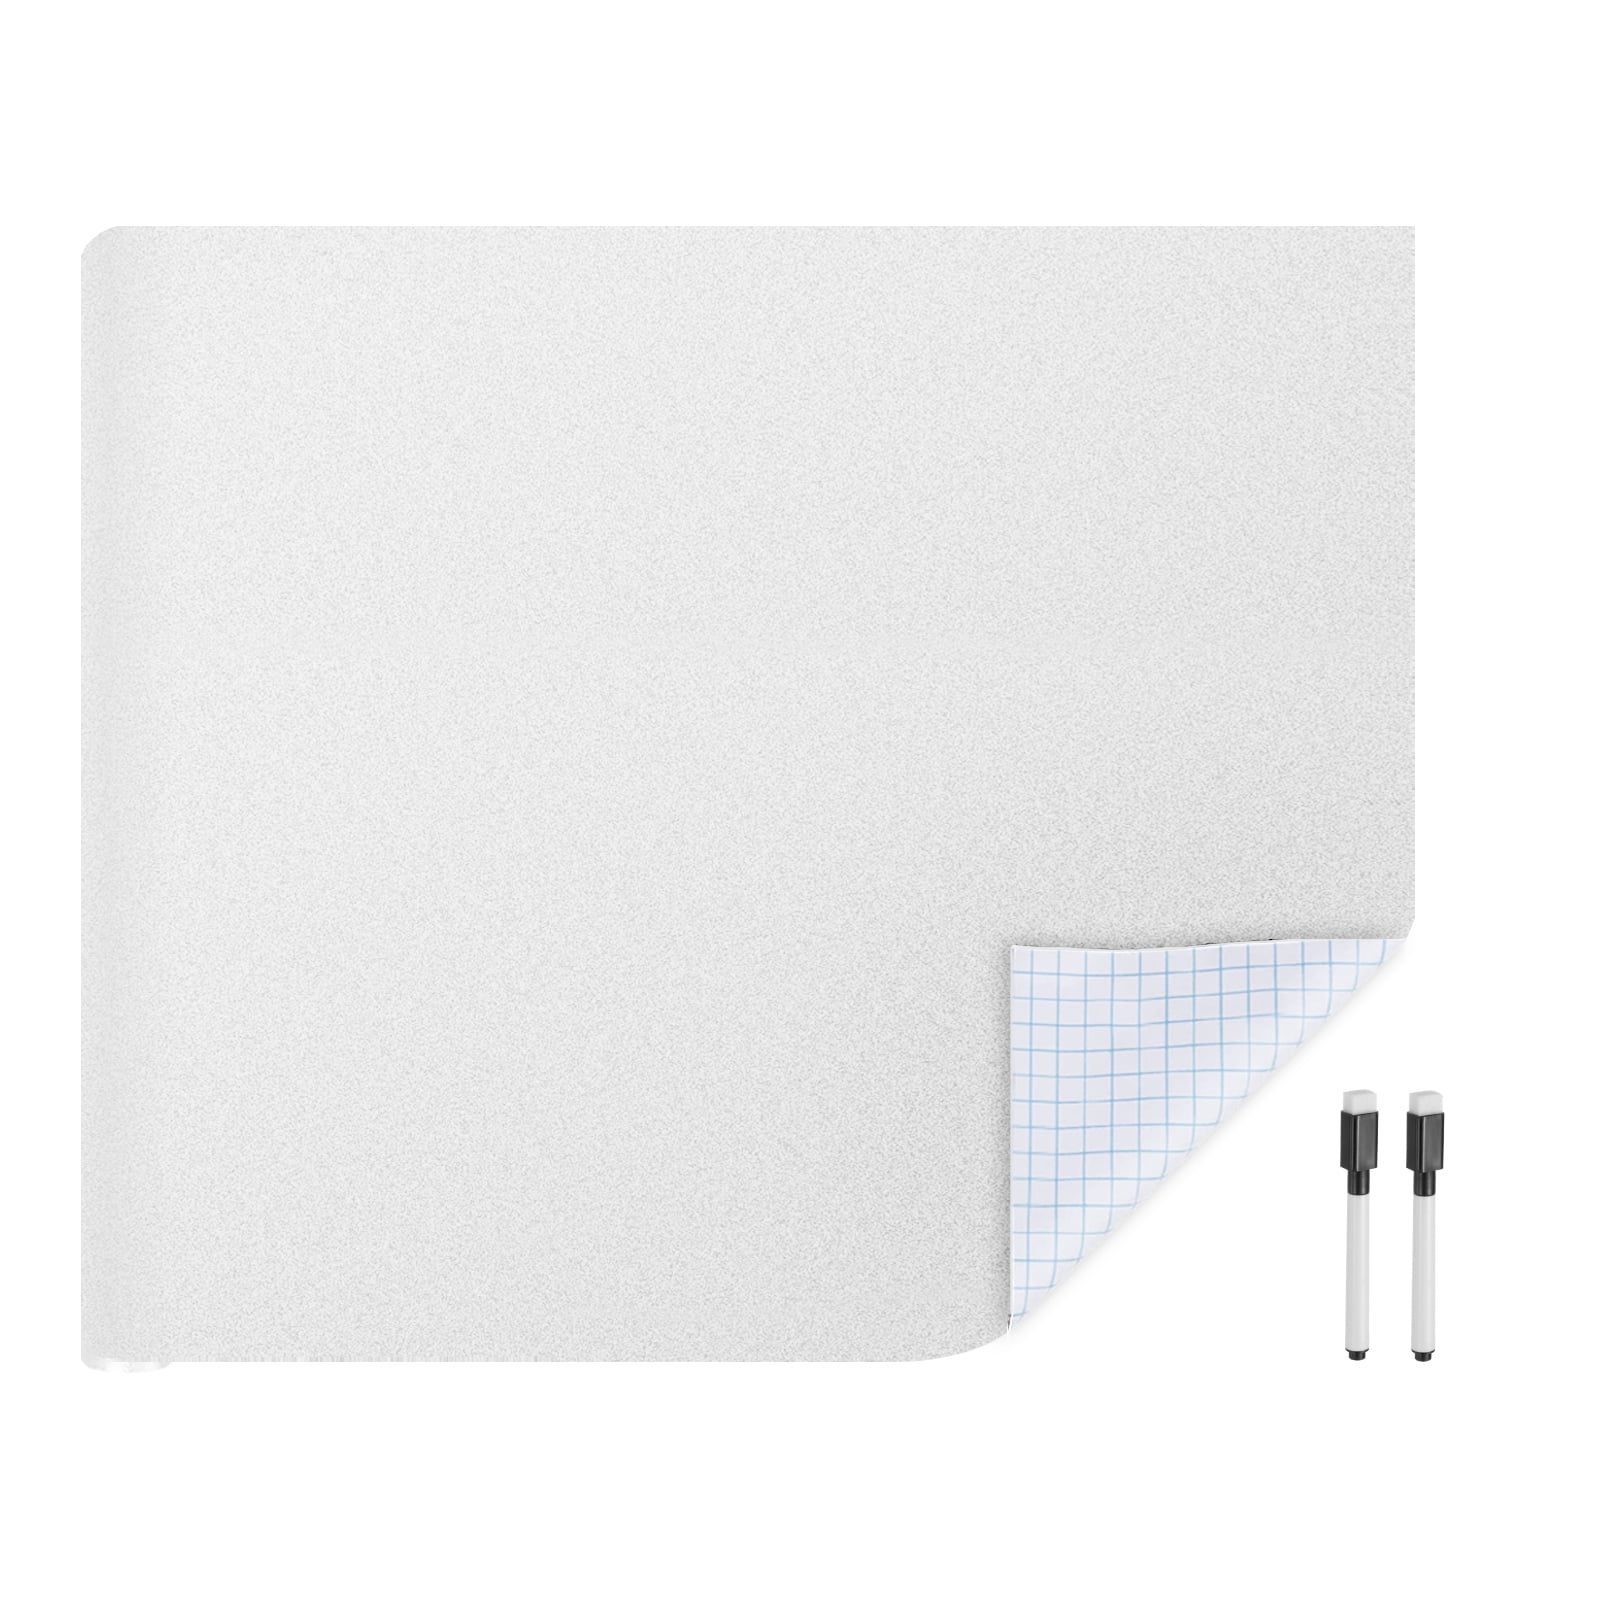 Buying Guide - Whiteboard Paint or Whiteboard Wallpaper? – ScribbleWall